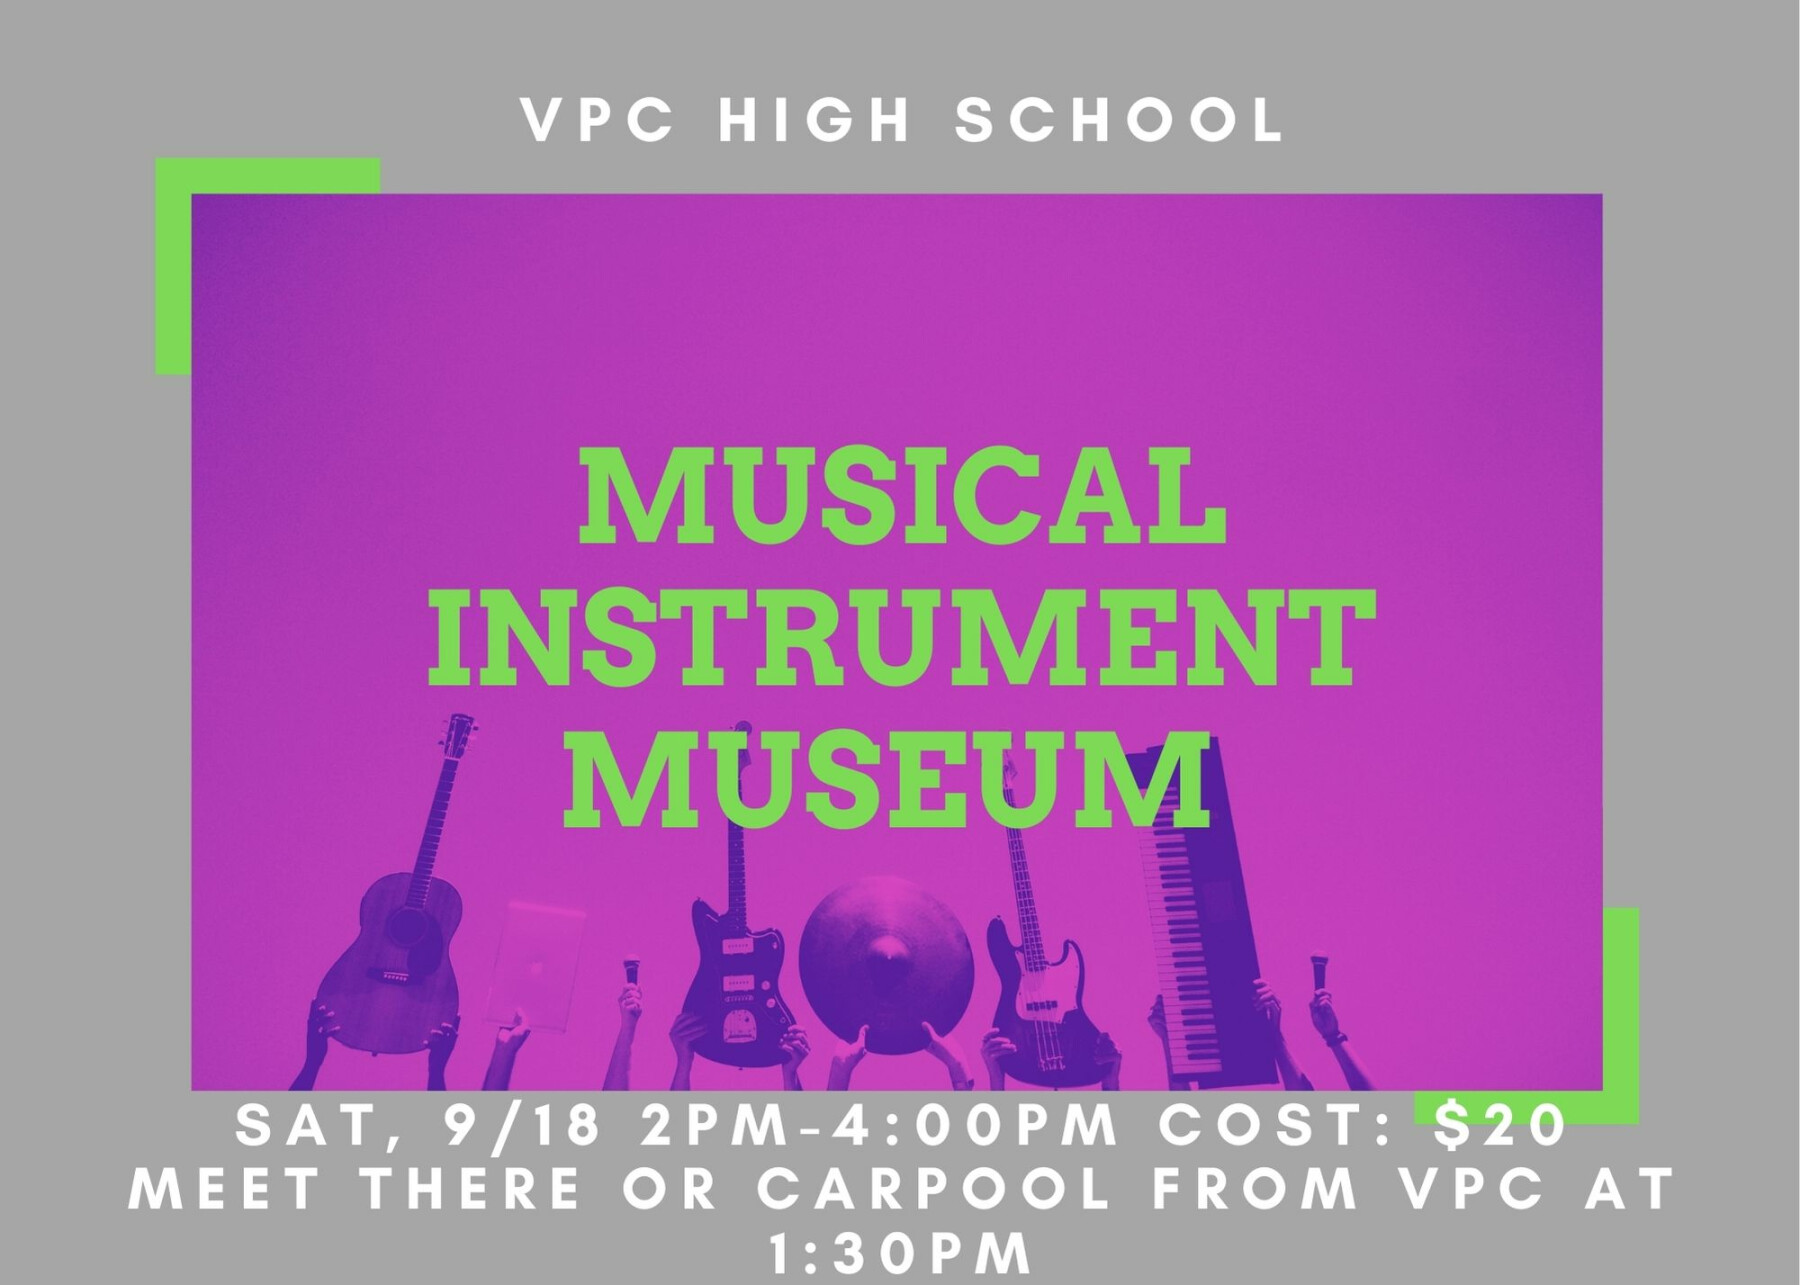 VPC High School: Musical Instrument Museum